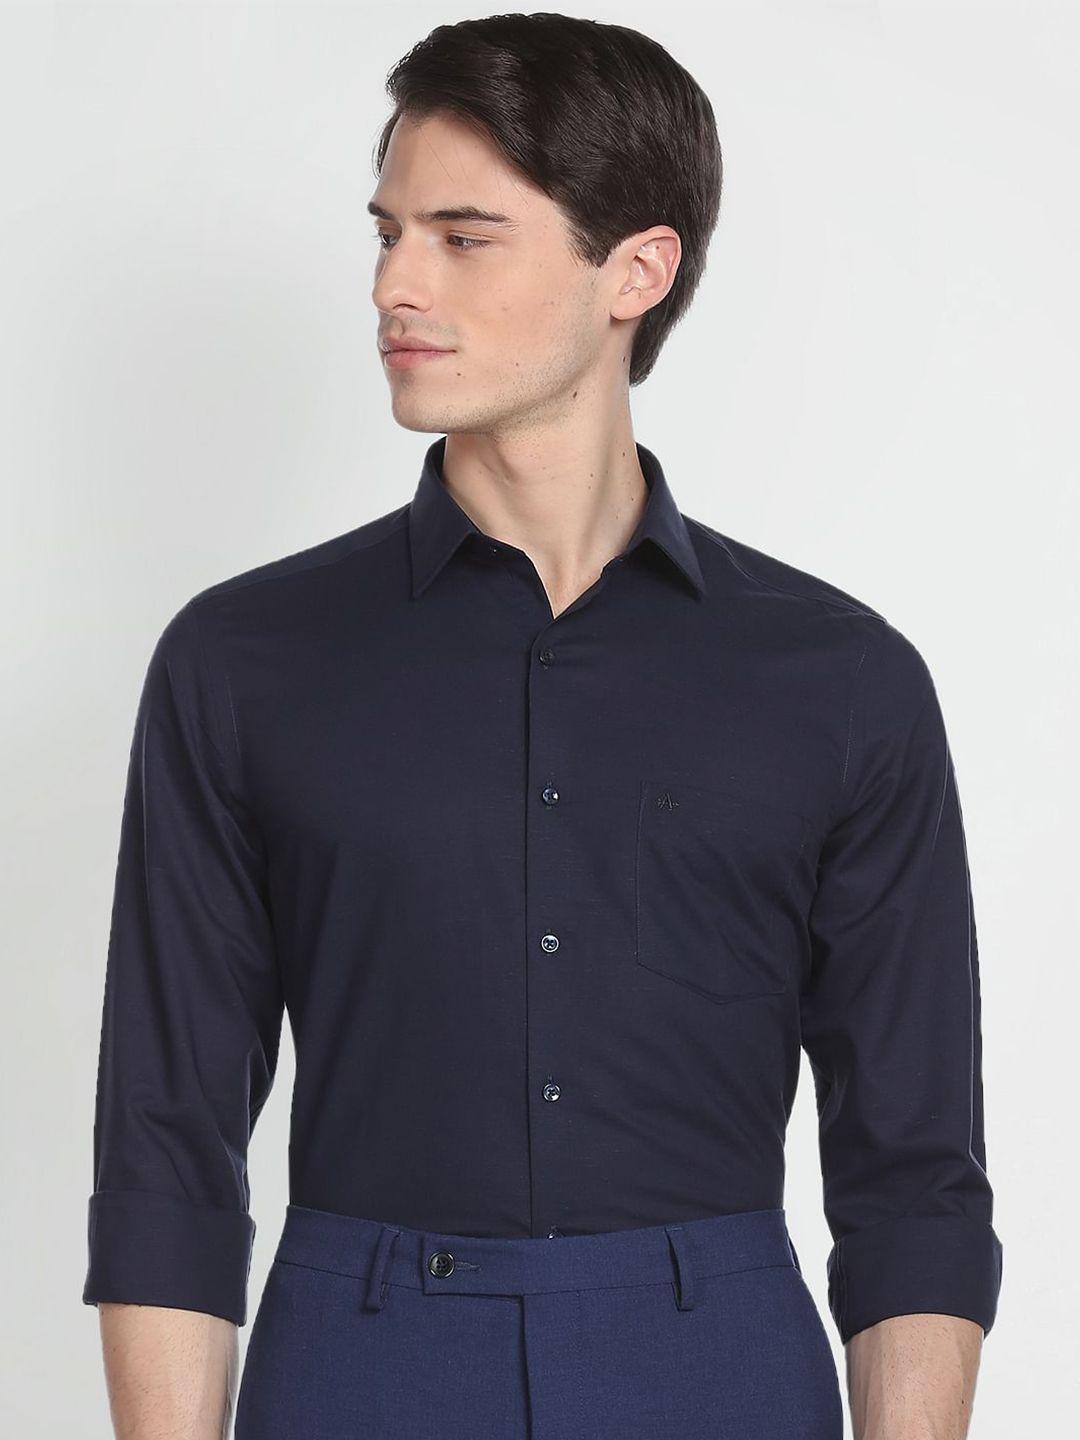 arrow spread collar slim fit formal shirt